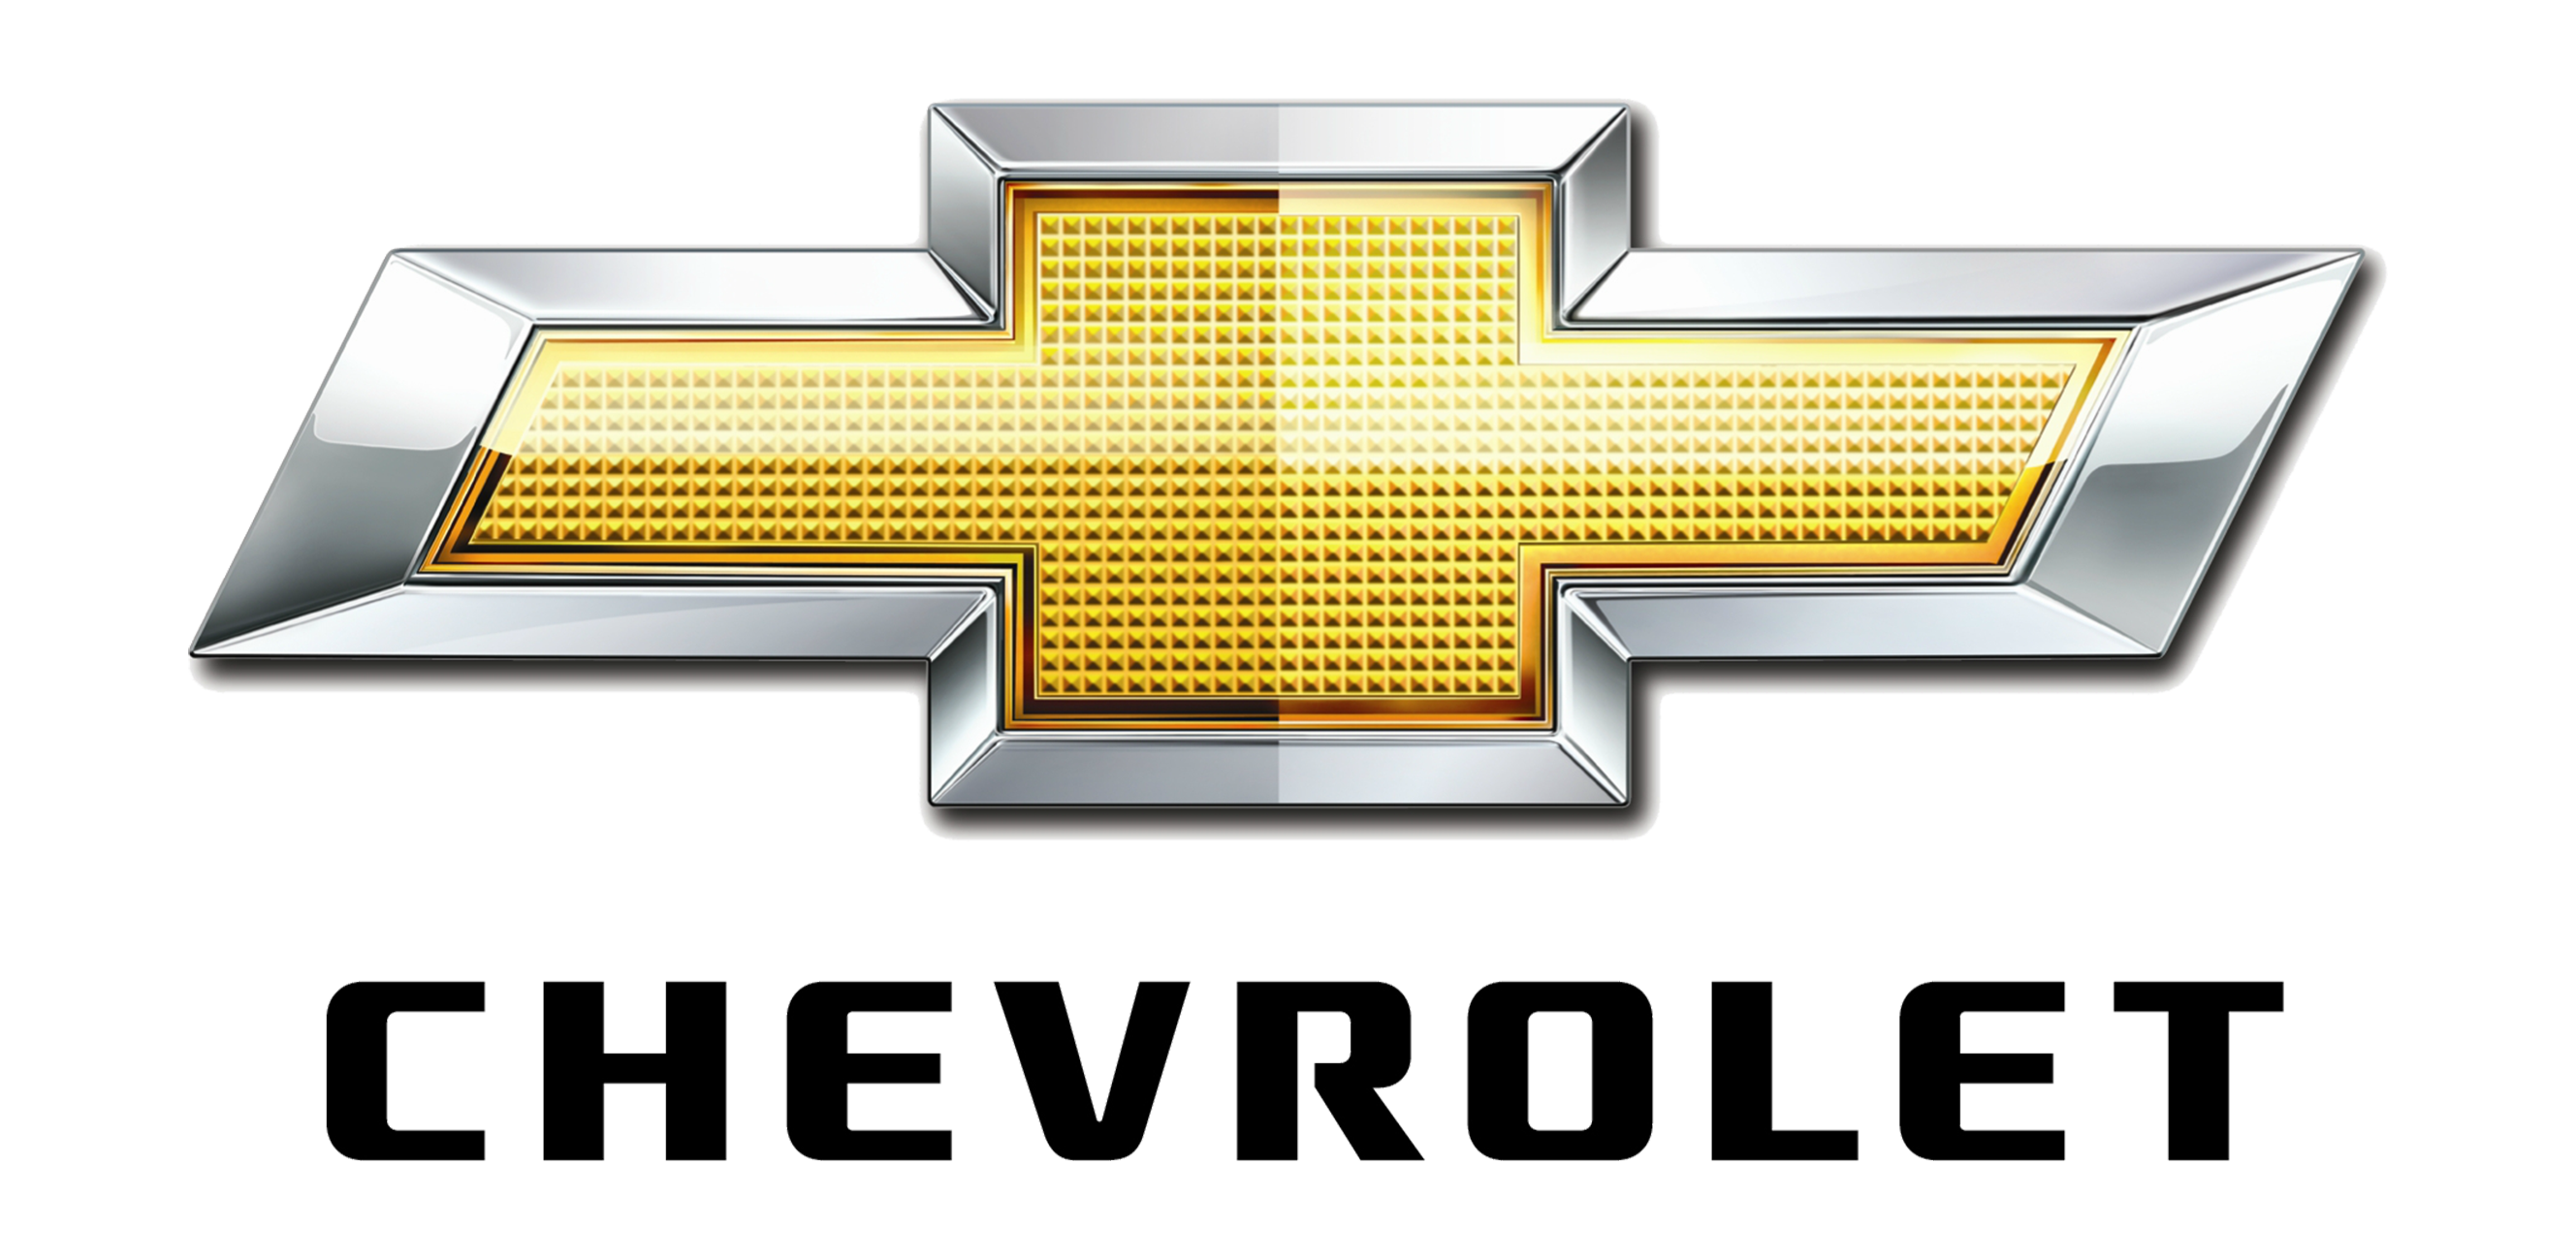 Chevrolet-2